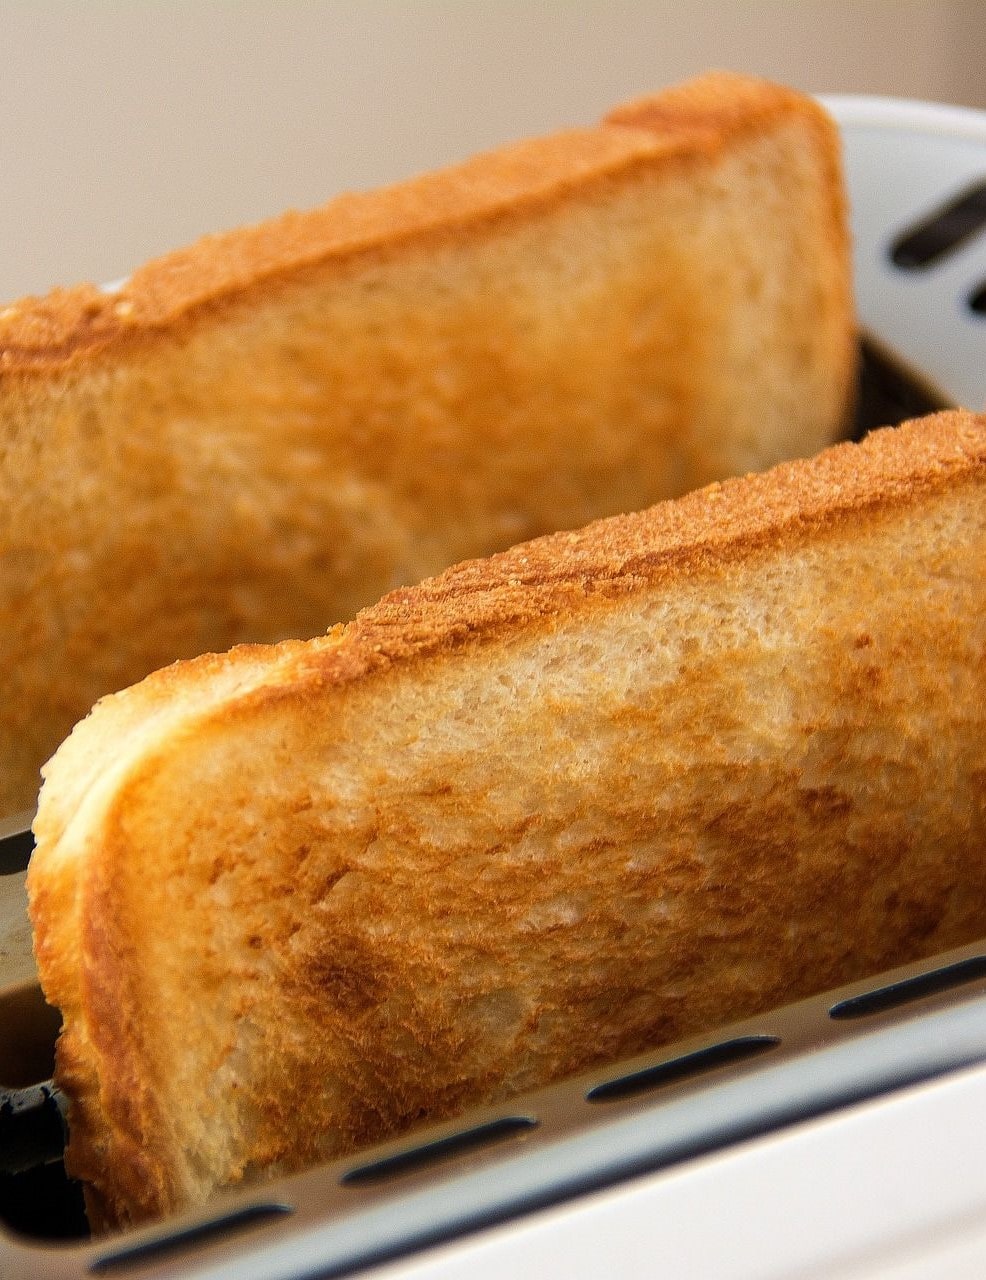 How to make toast